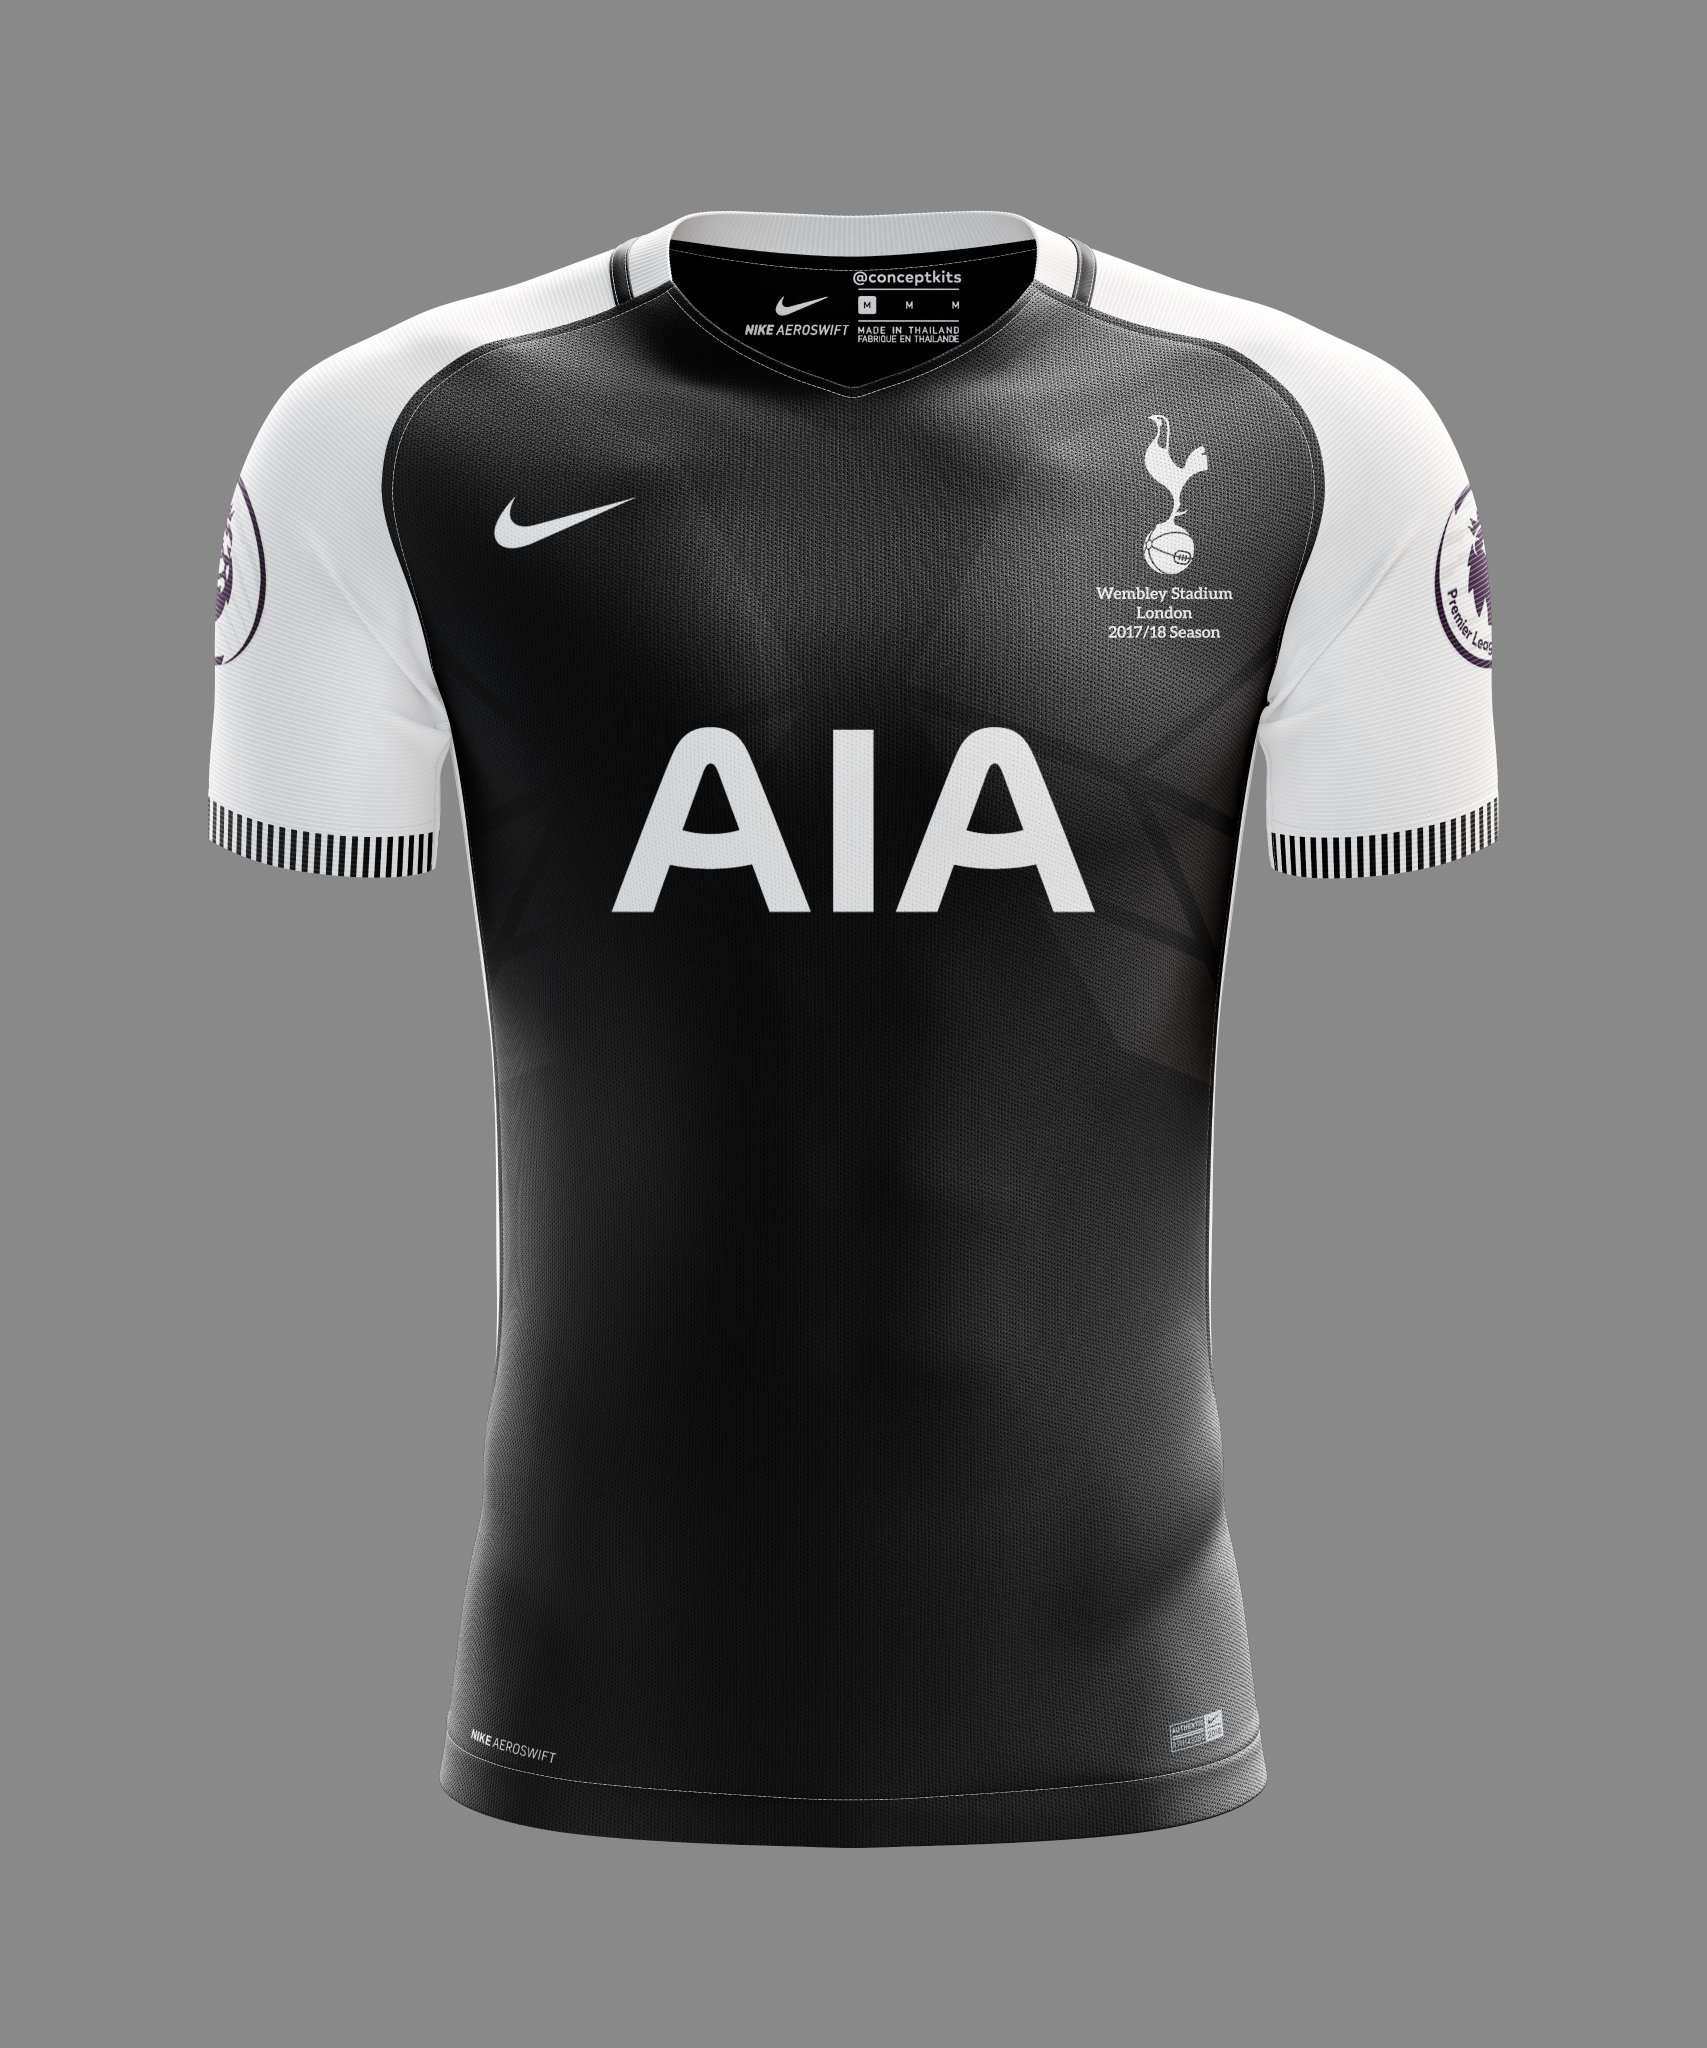 Concept Kits on Twitter: "Tottenham Hotspur Football Club third kit